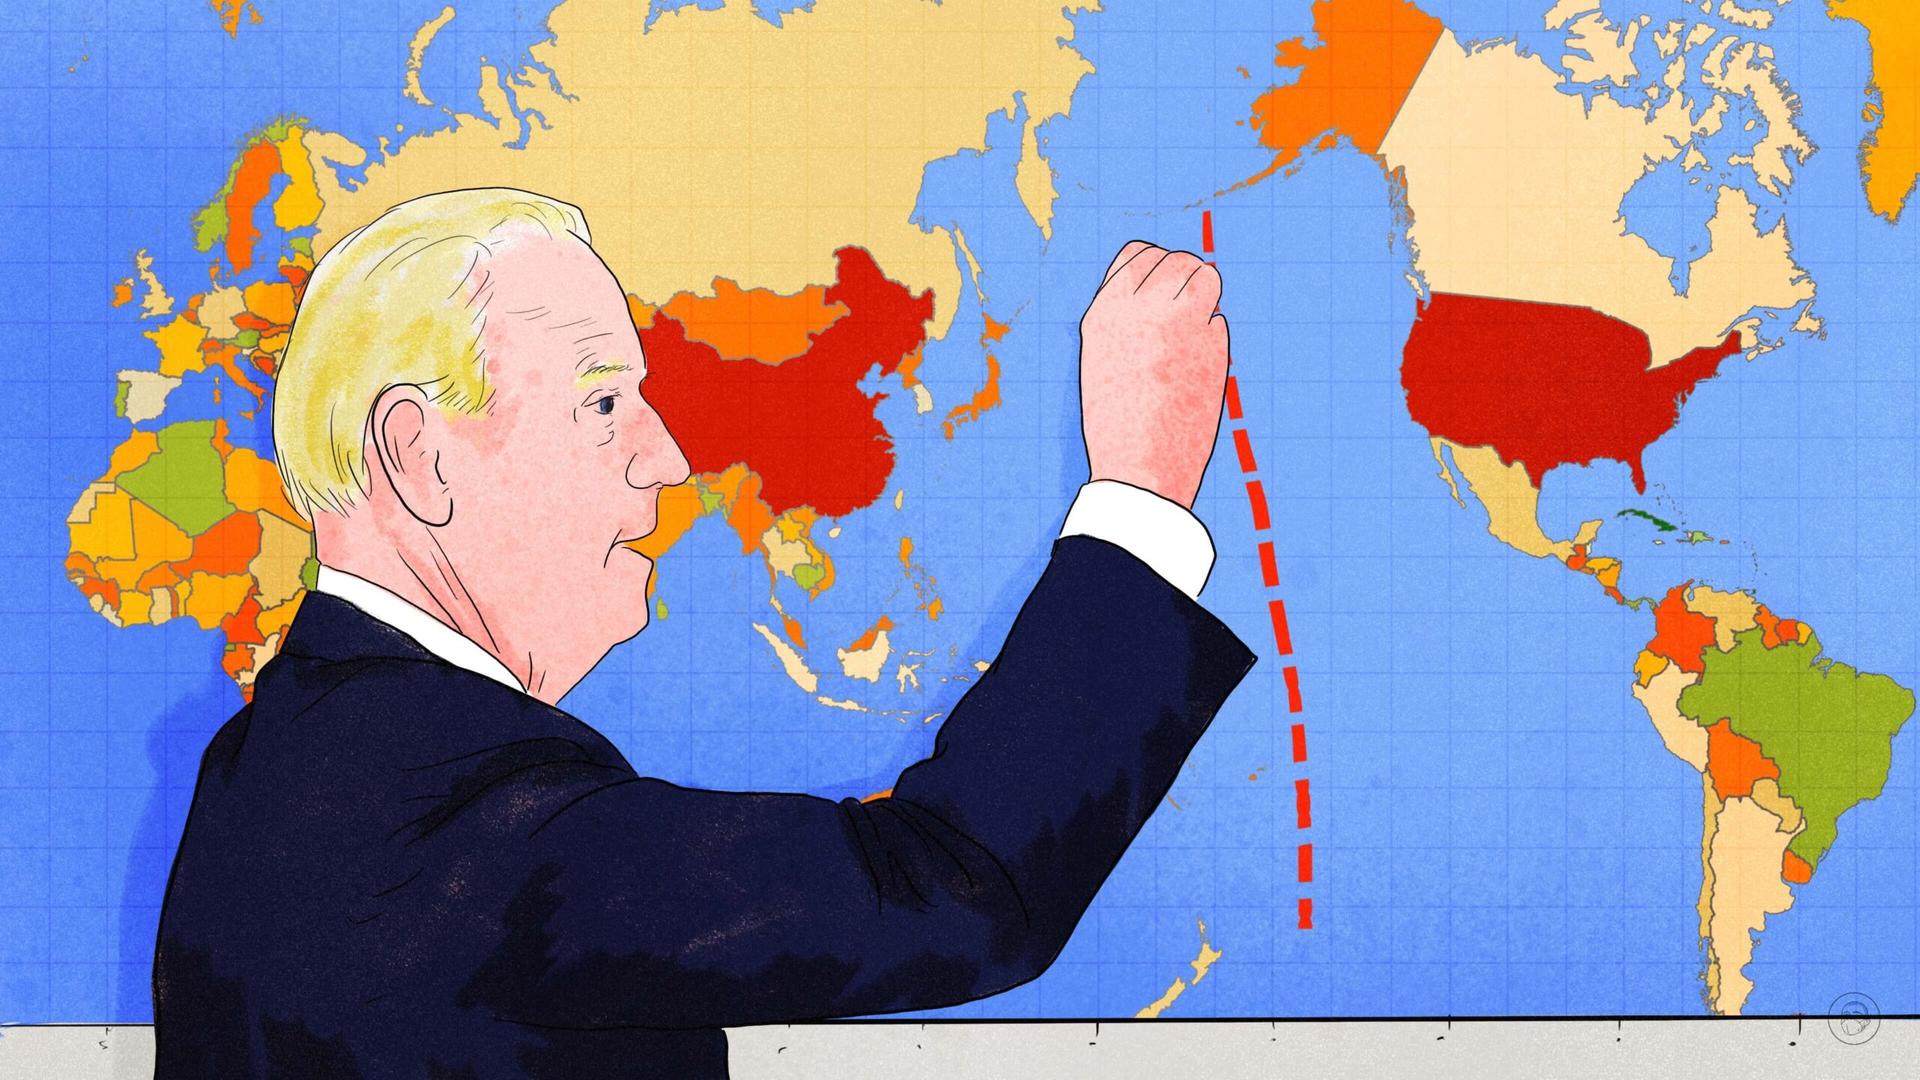 An illustration by Alex Santafe depicting Joe Biden drawing a line on a map